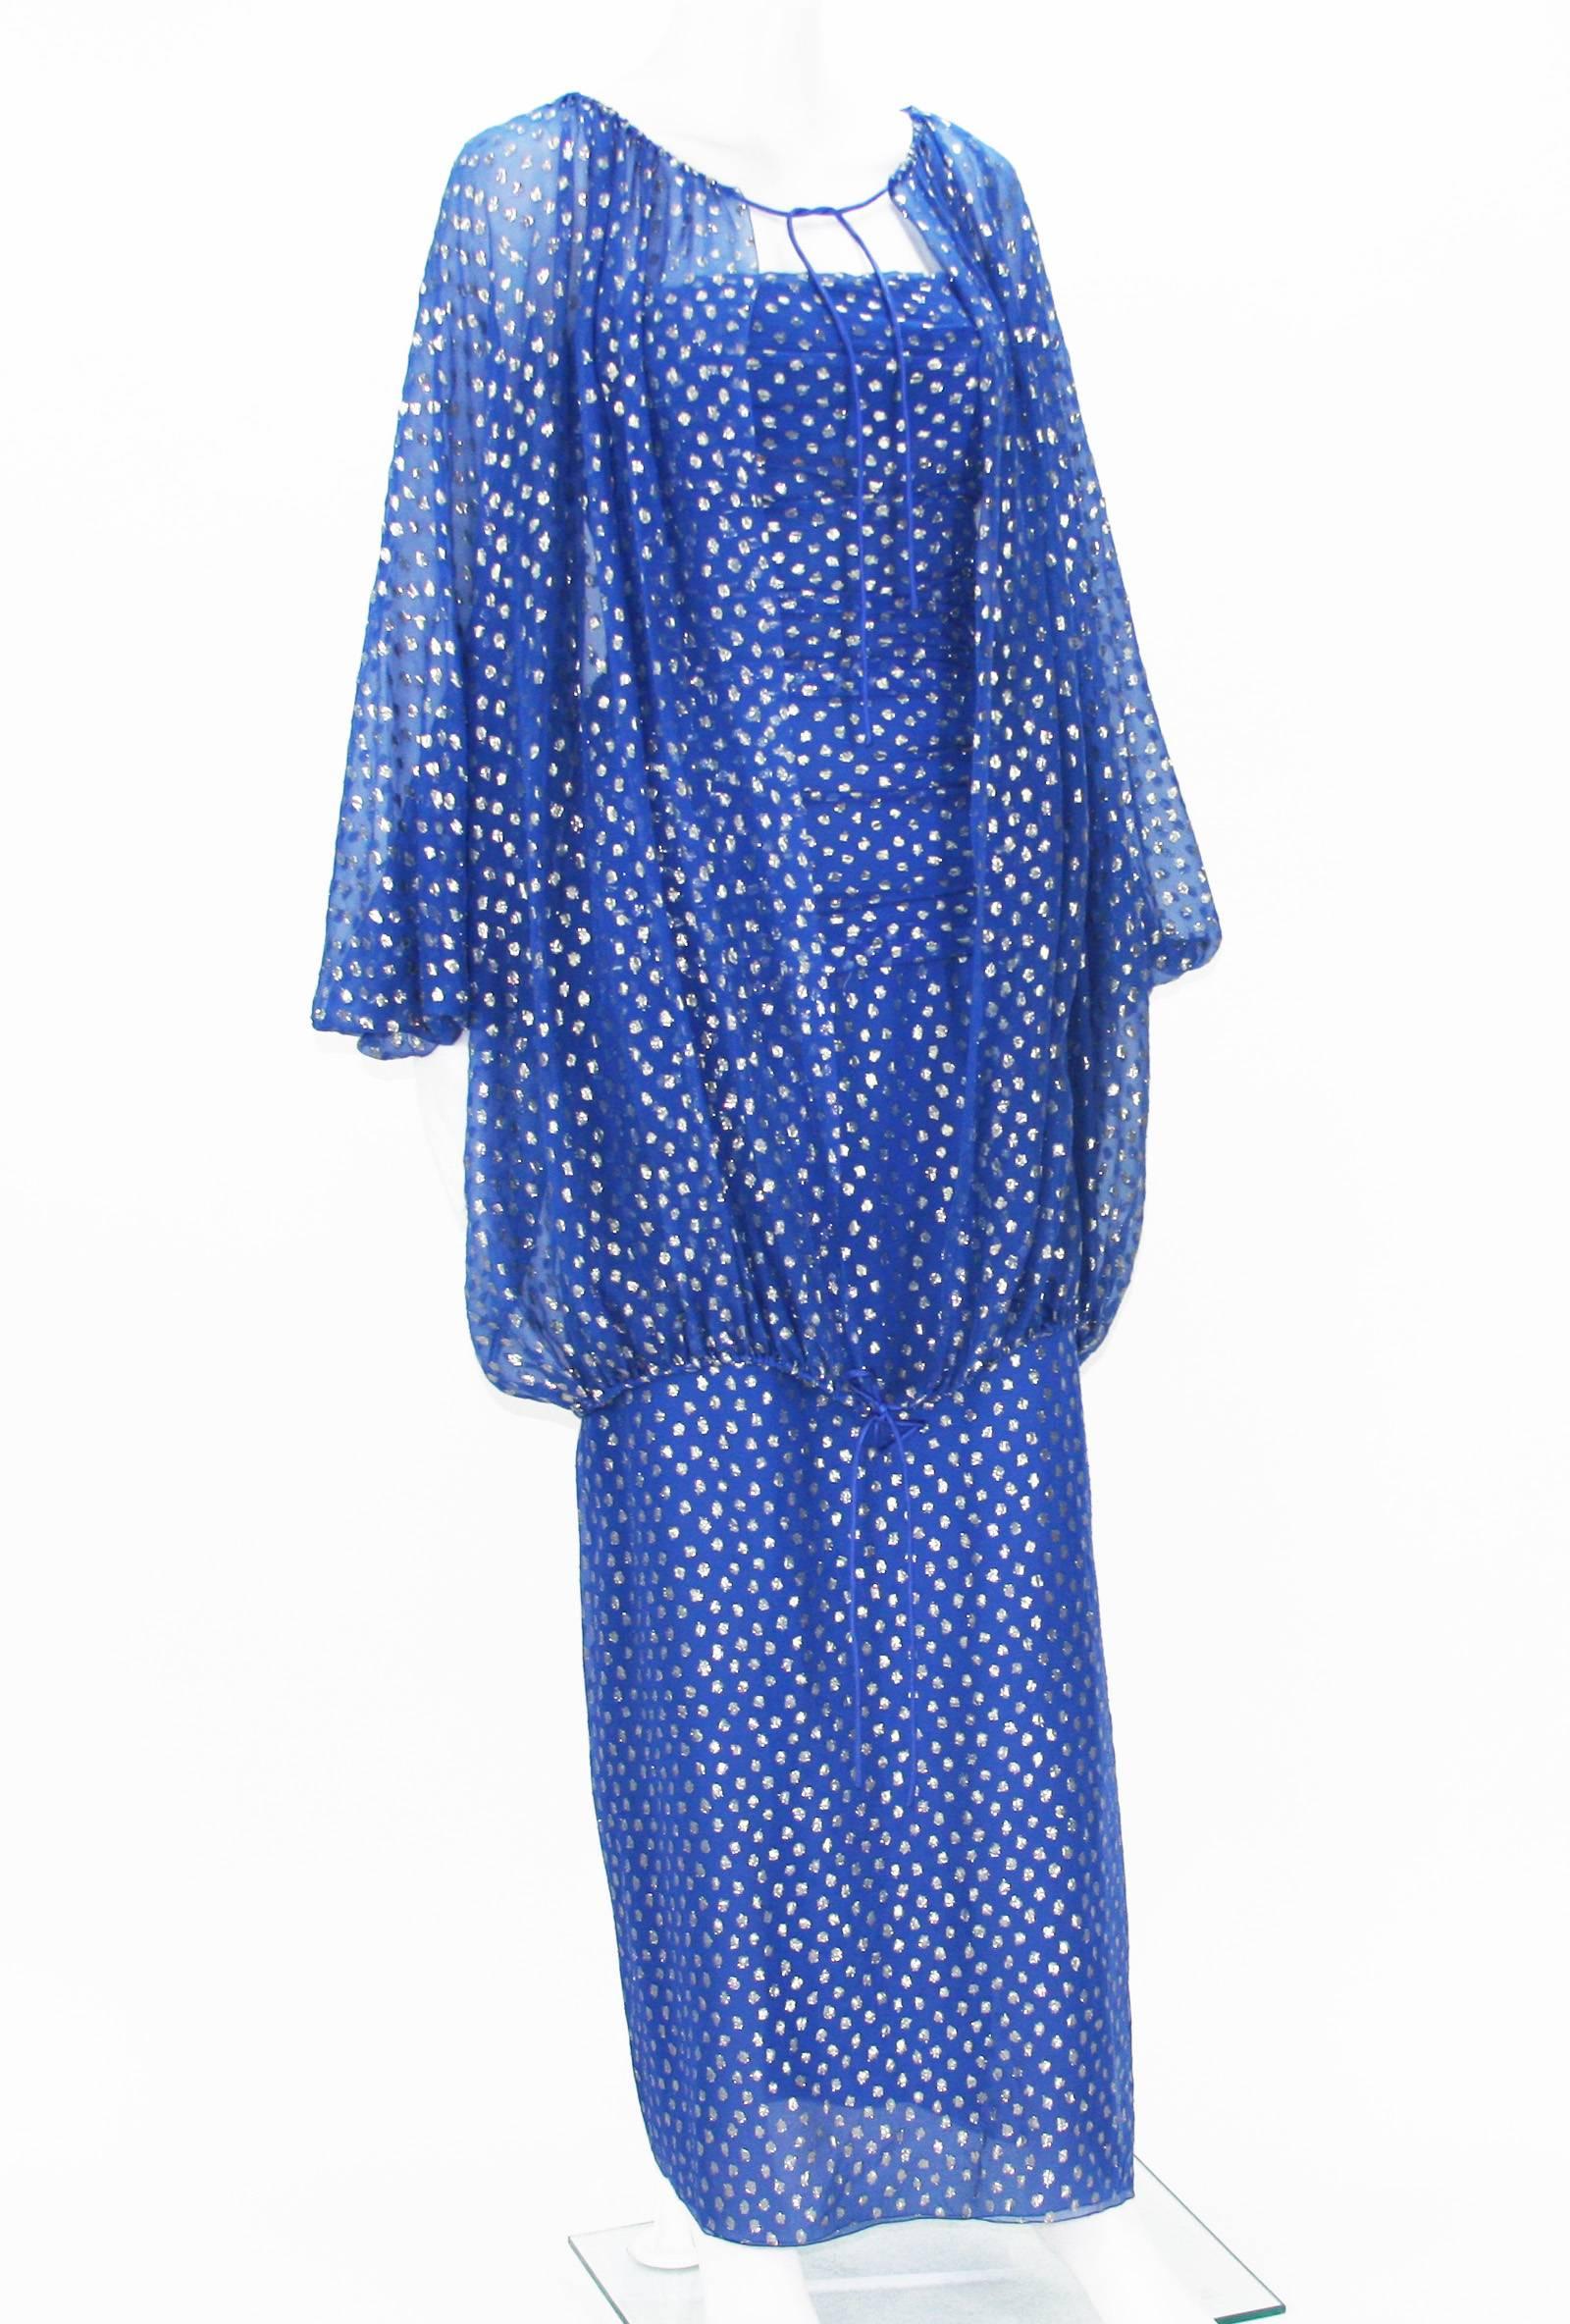 Christian Dior Paris F/W 1976 Numbered Polka Dot Blue Sheer Dress Set 11